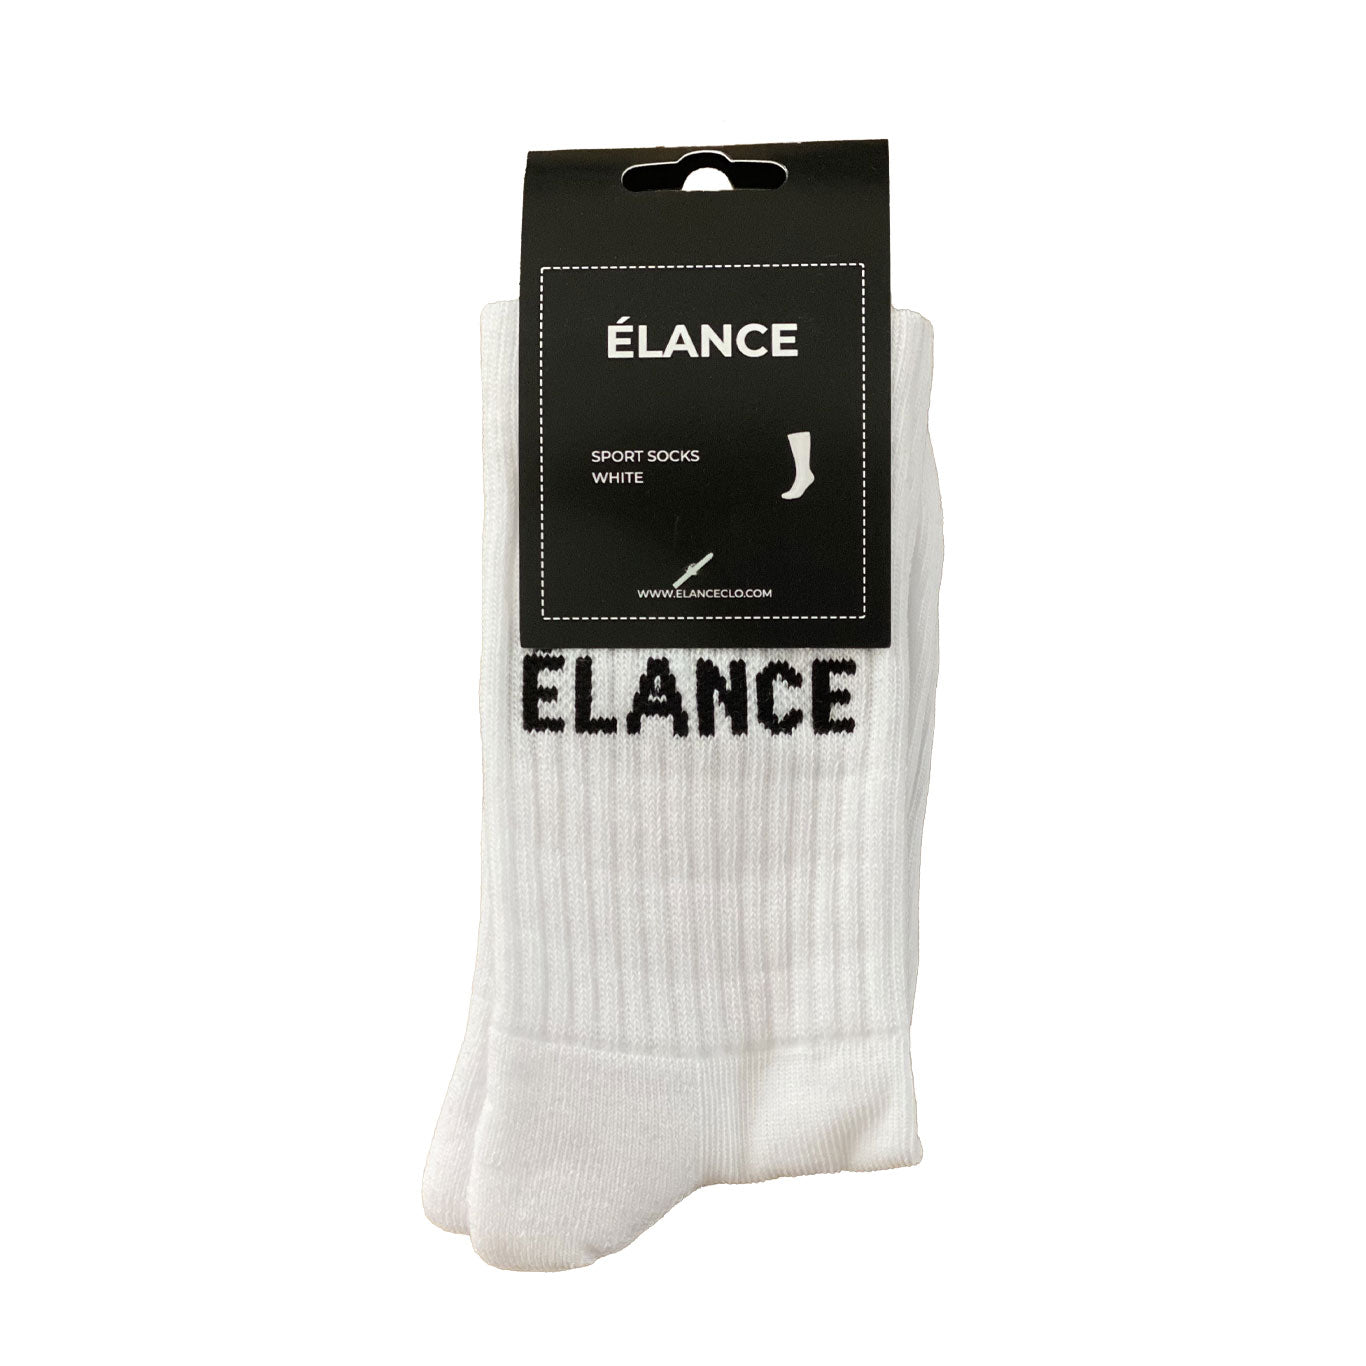 ÉLANCE Socks